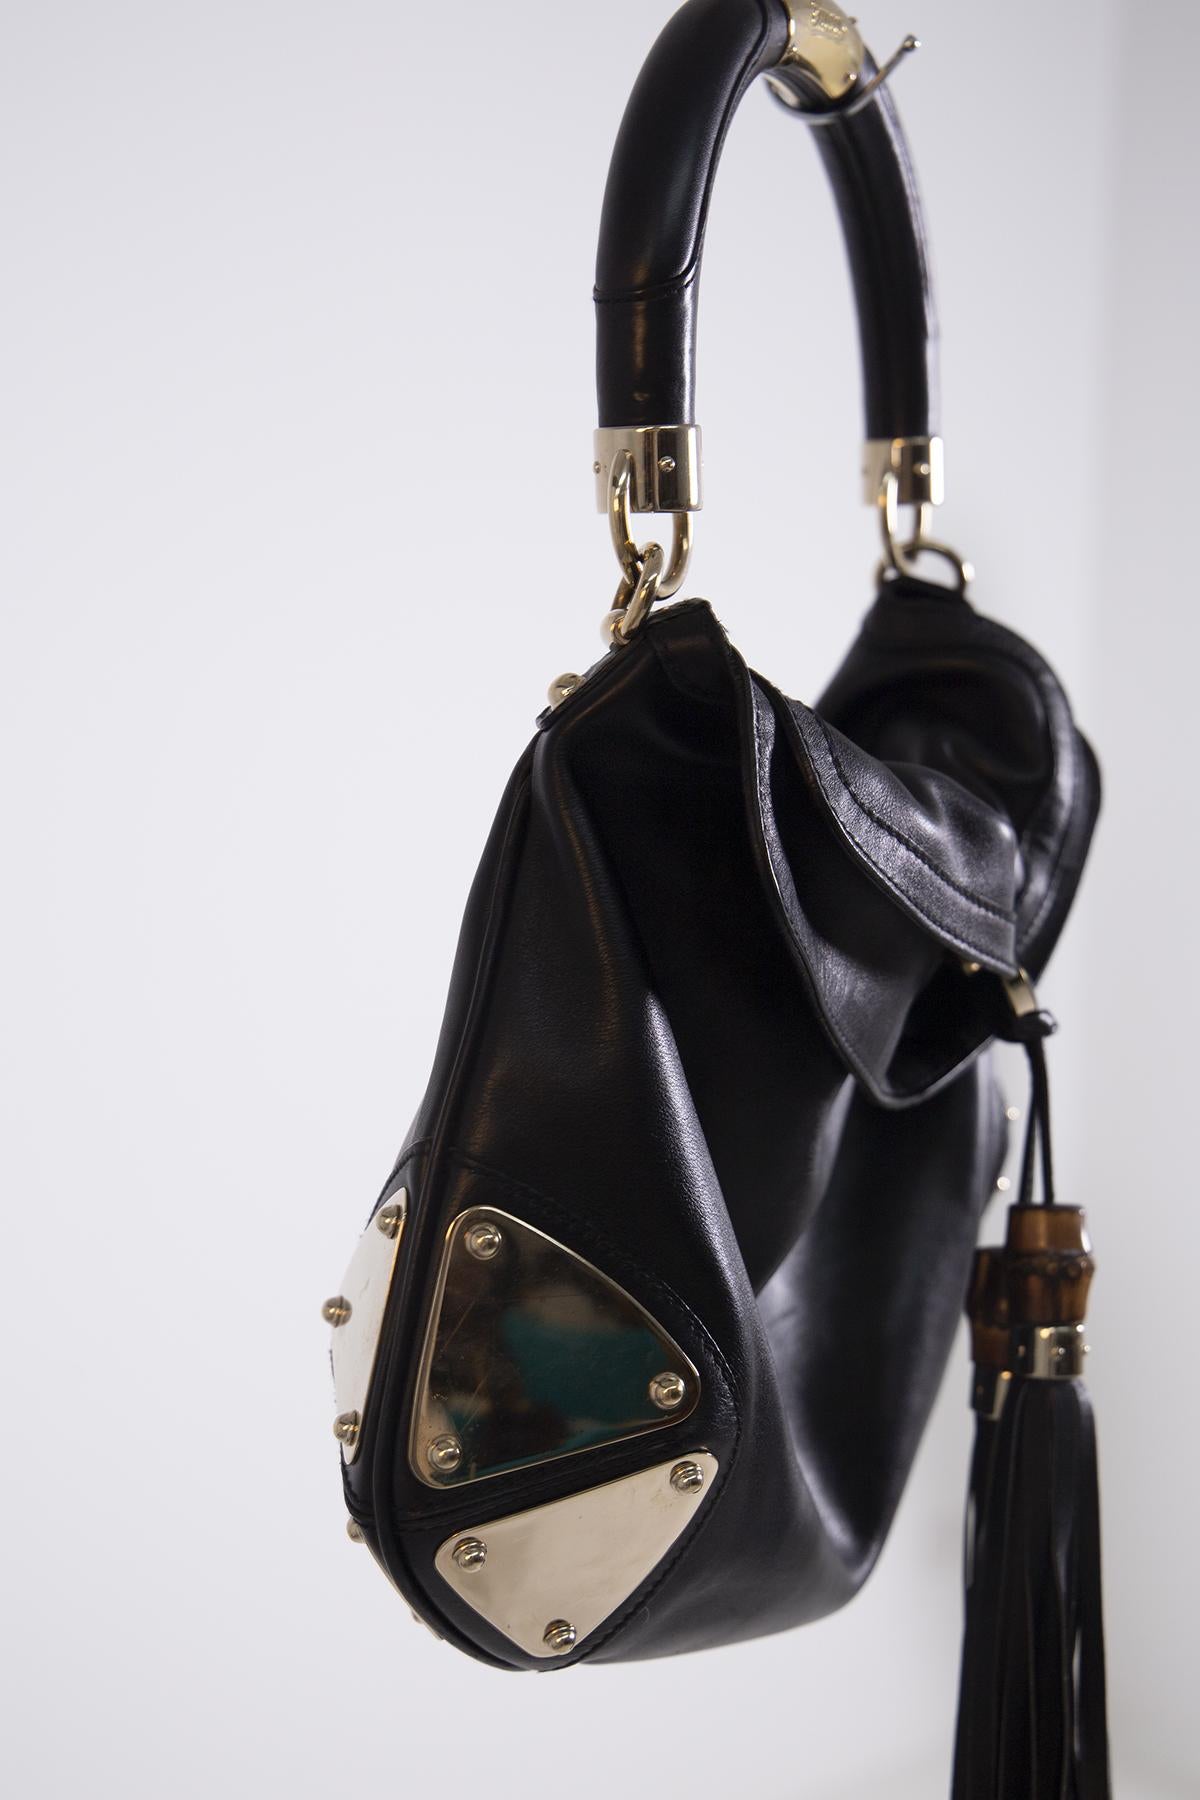 Gucci Indy Babouska Leather Bag in Gold Metal Black w Fringes 3